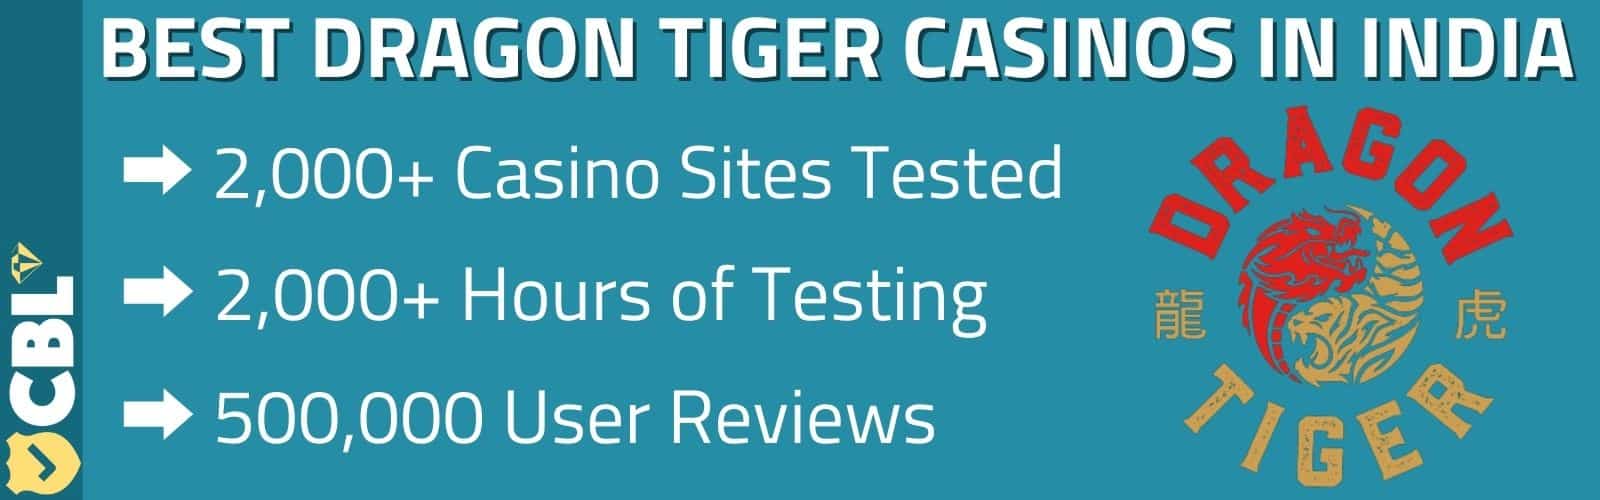 Best Dragon Tiger Online Casinos in India